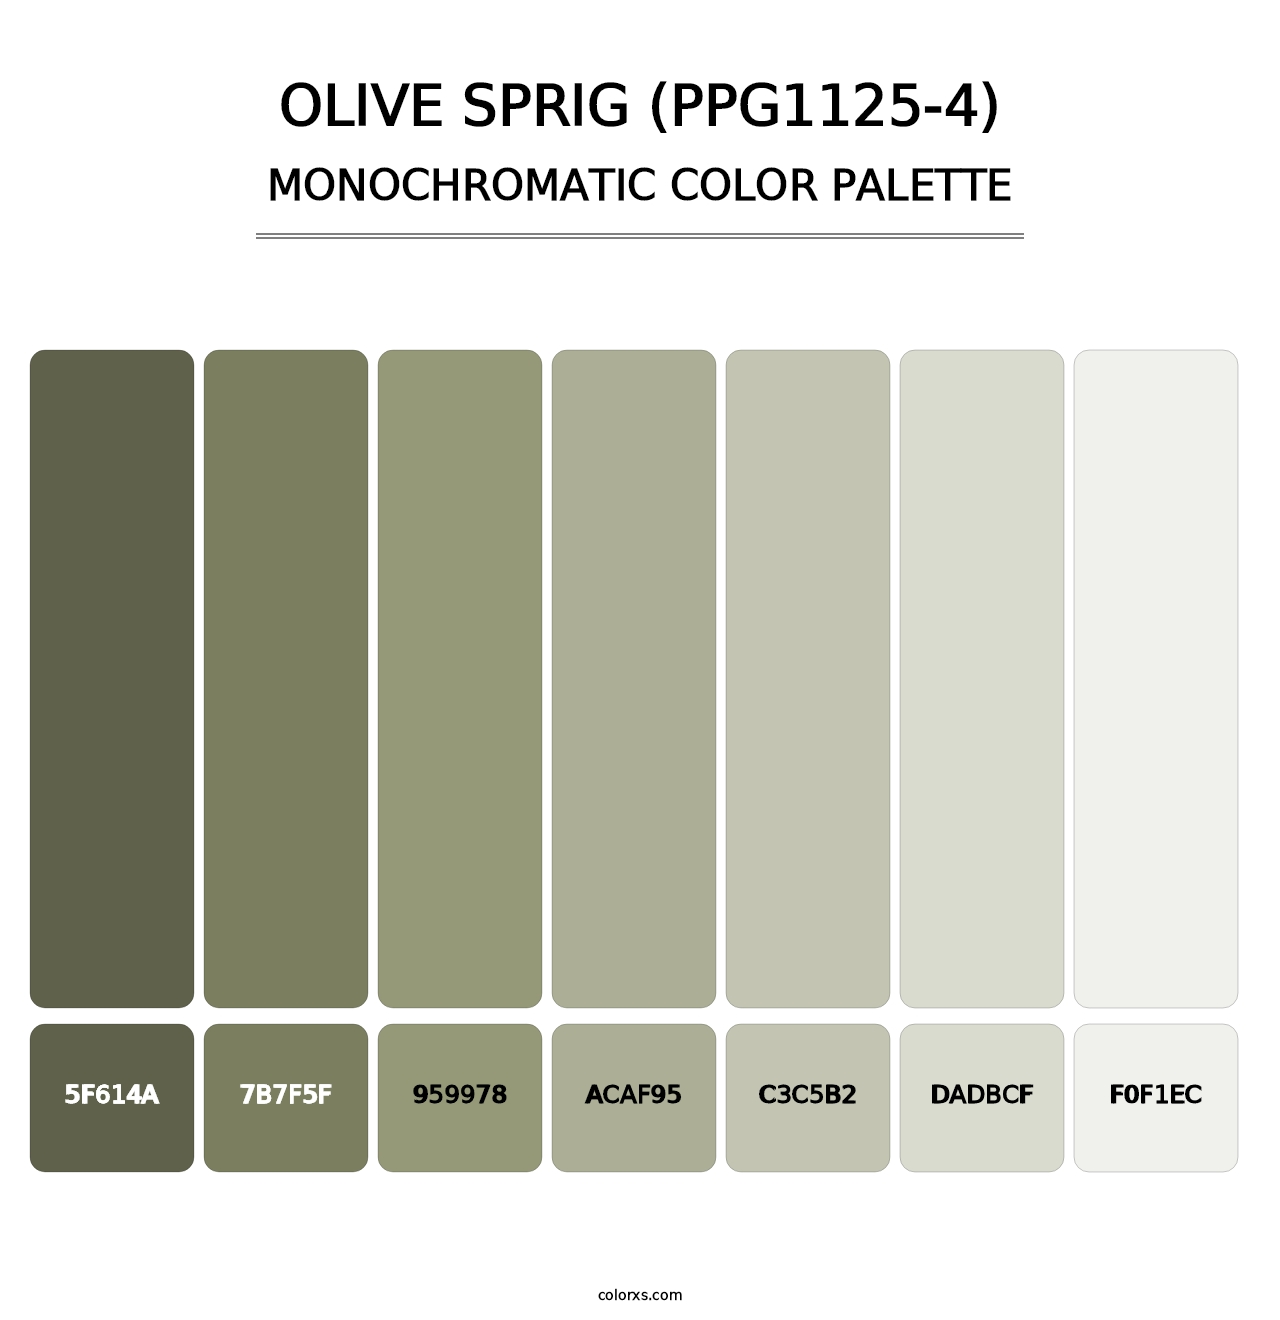 Olive Sprig (PPG1125-4) - Monochromatic Color Palette